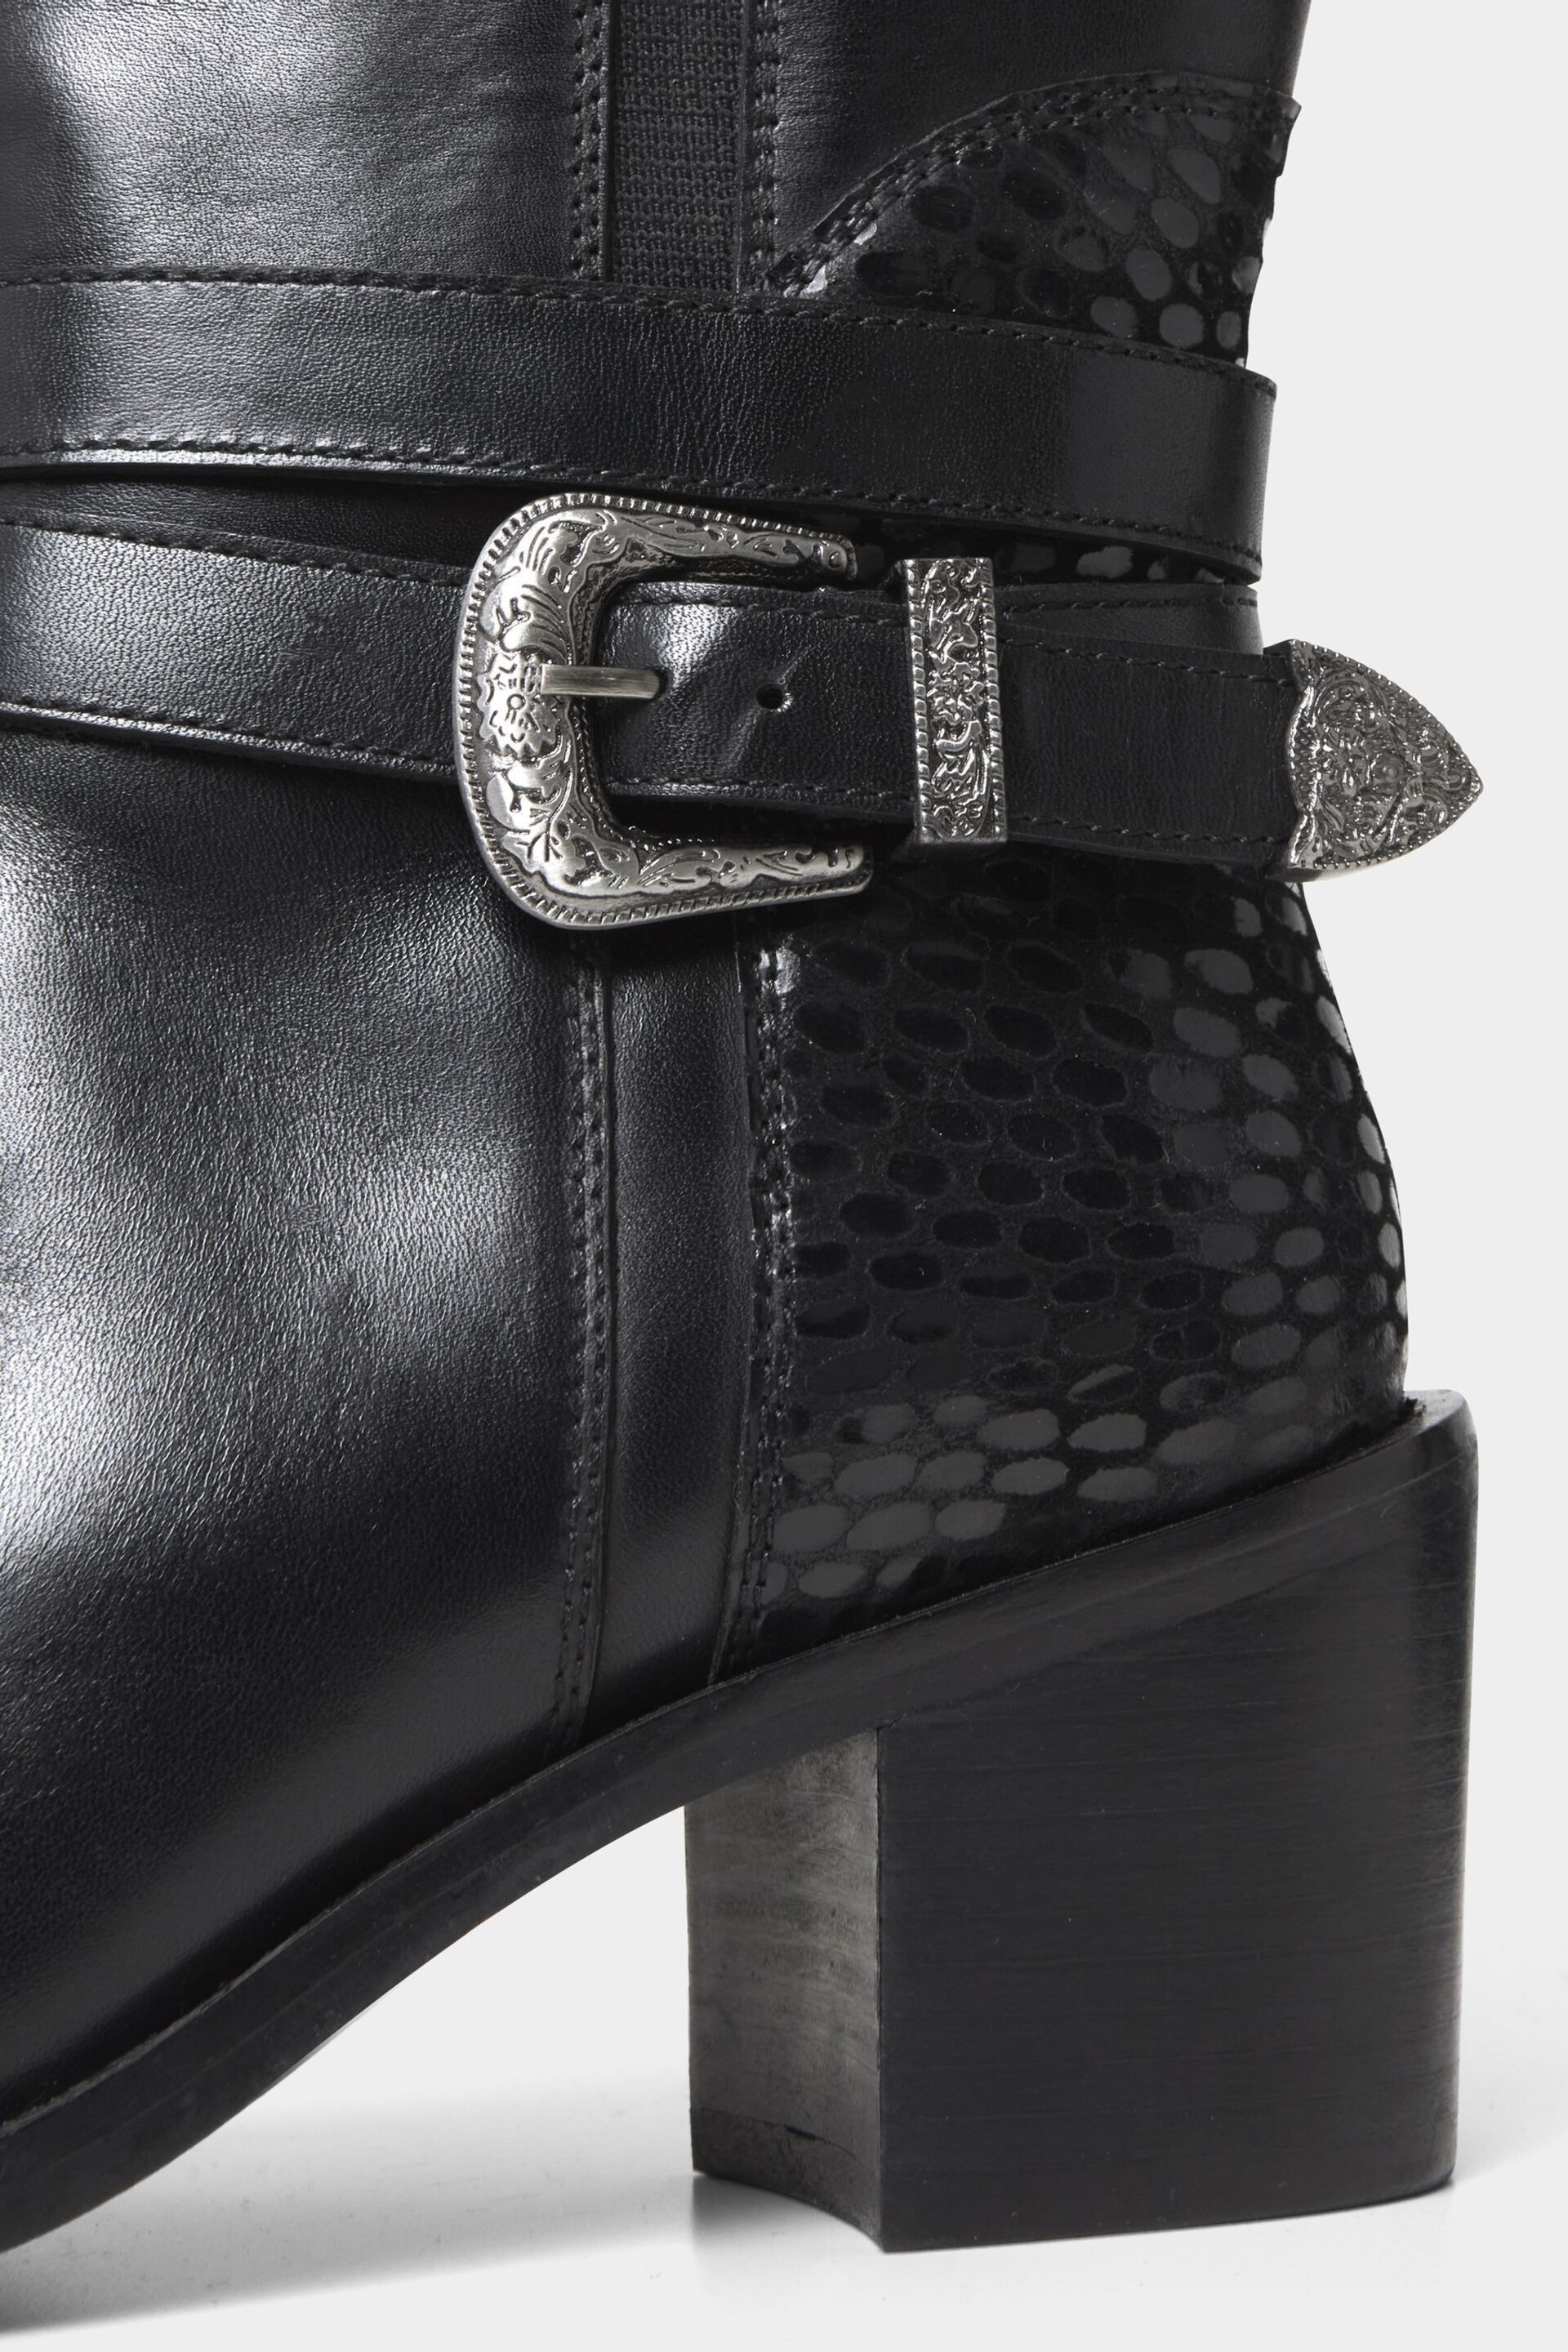 Joe Browns Black Gigi Premium Leather Rider Boots - Image 4 of 5